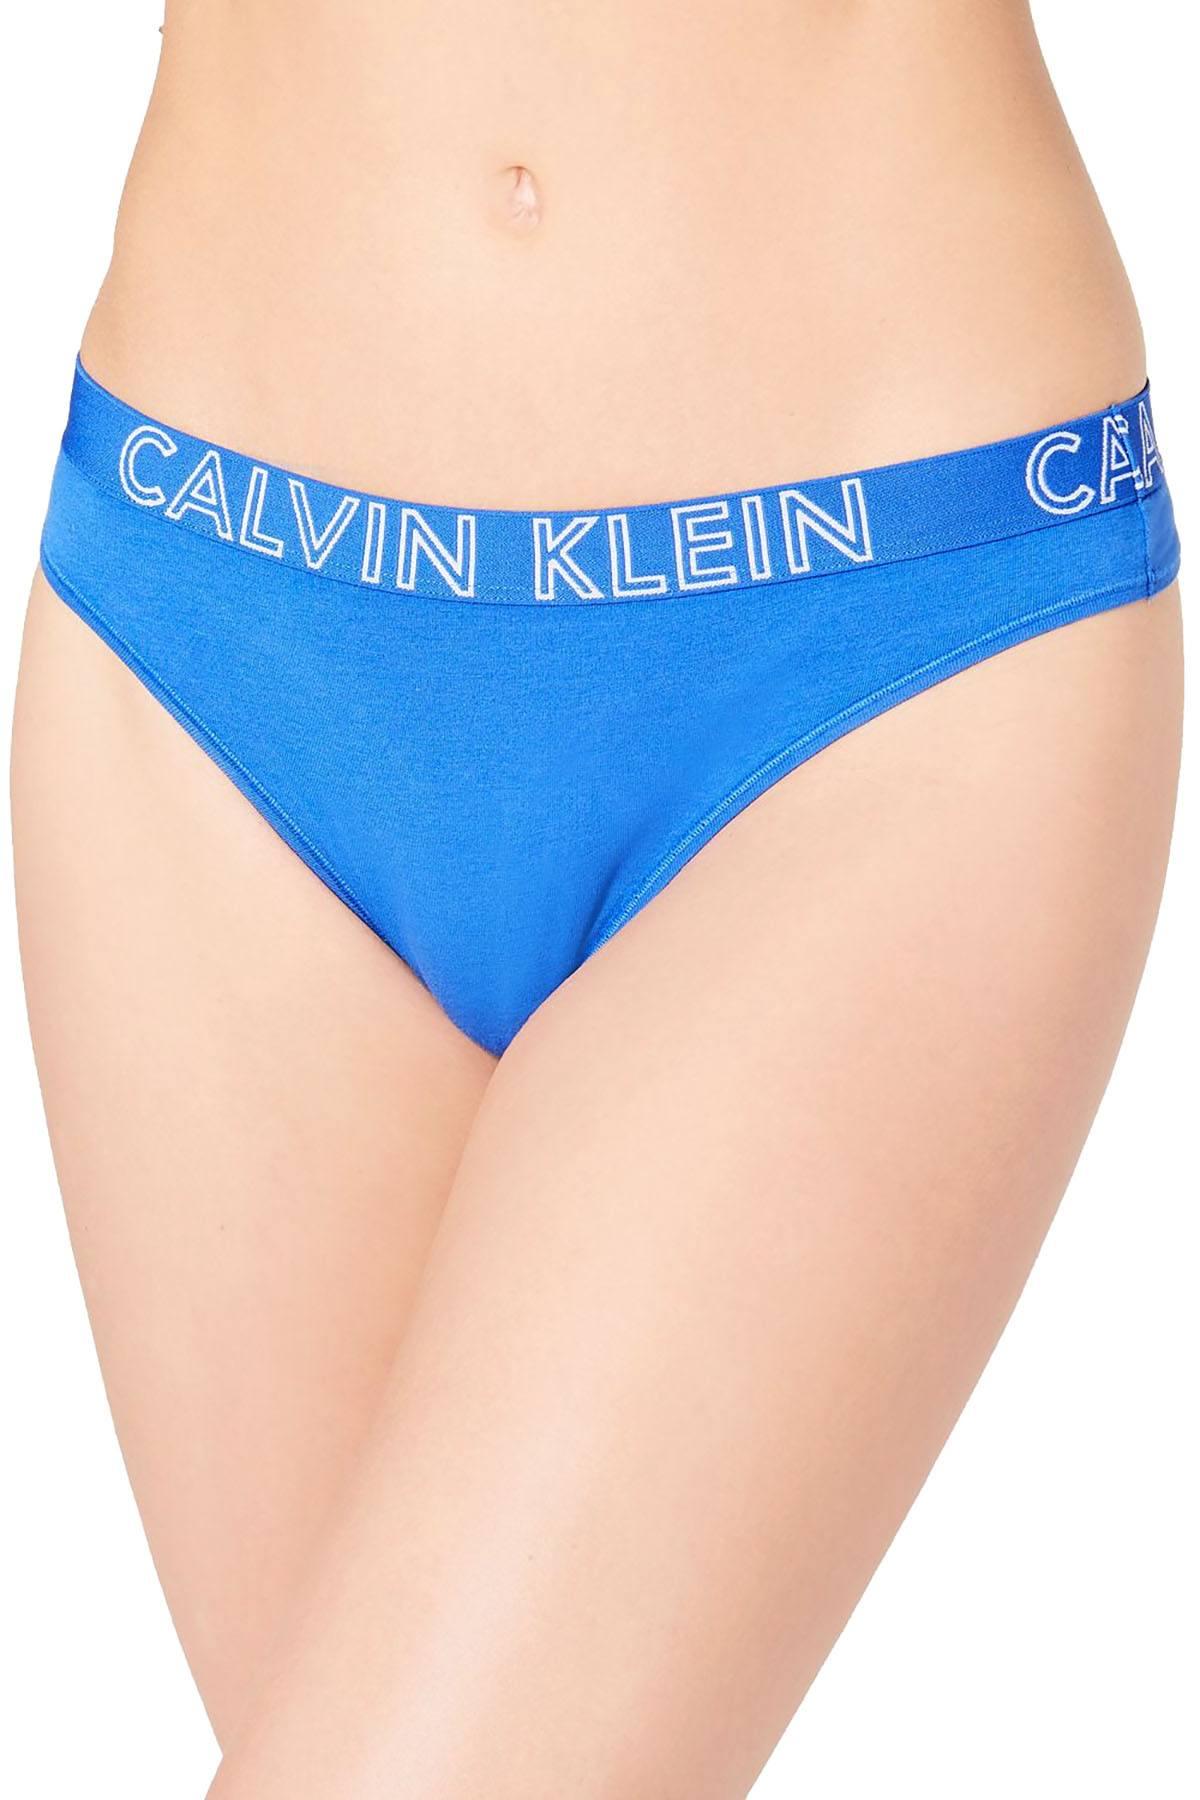 Calvin Klein CK Ultimate Cotton Thong in Stellar Blue